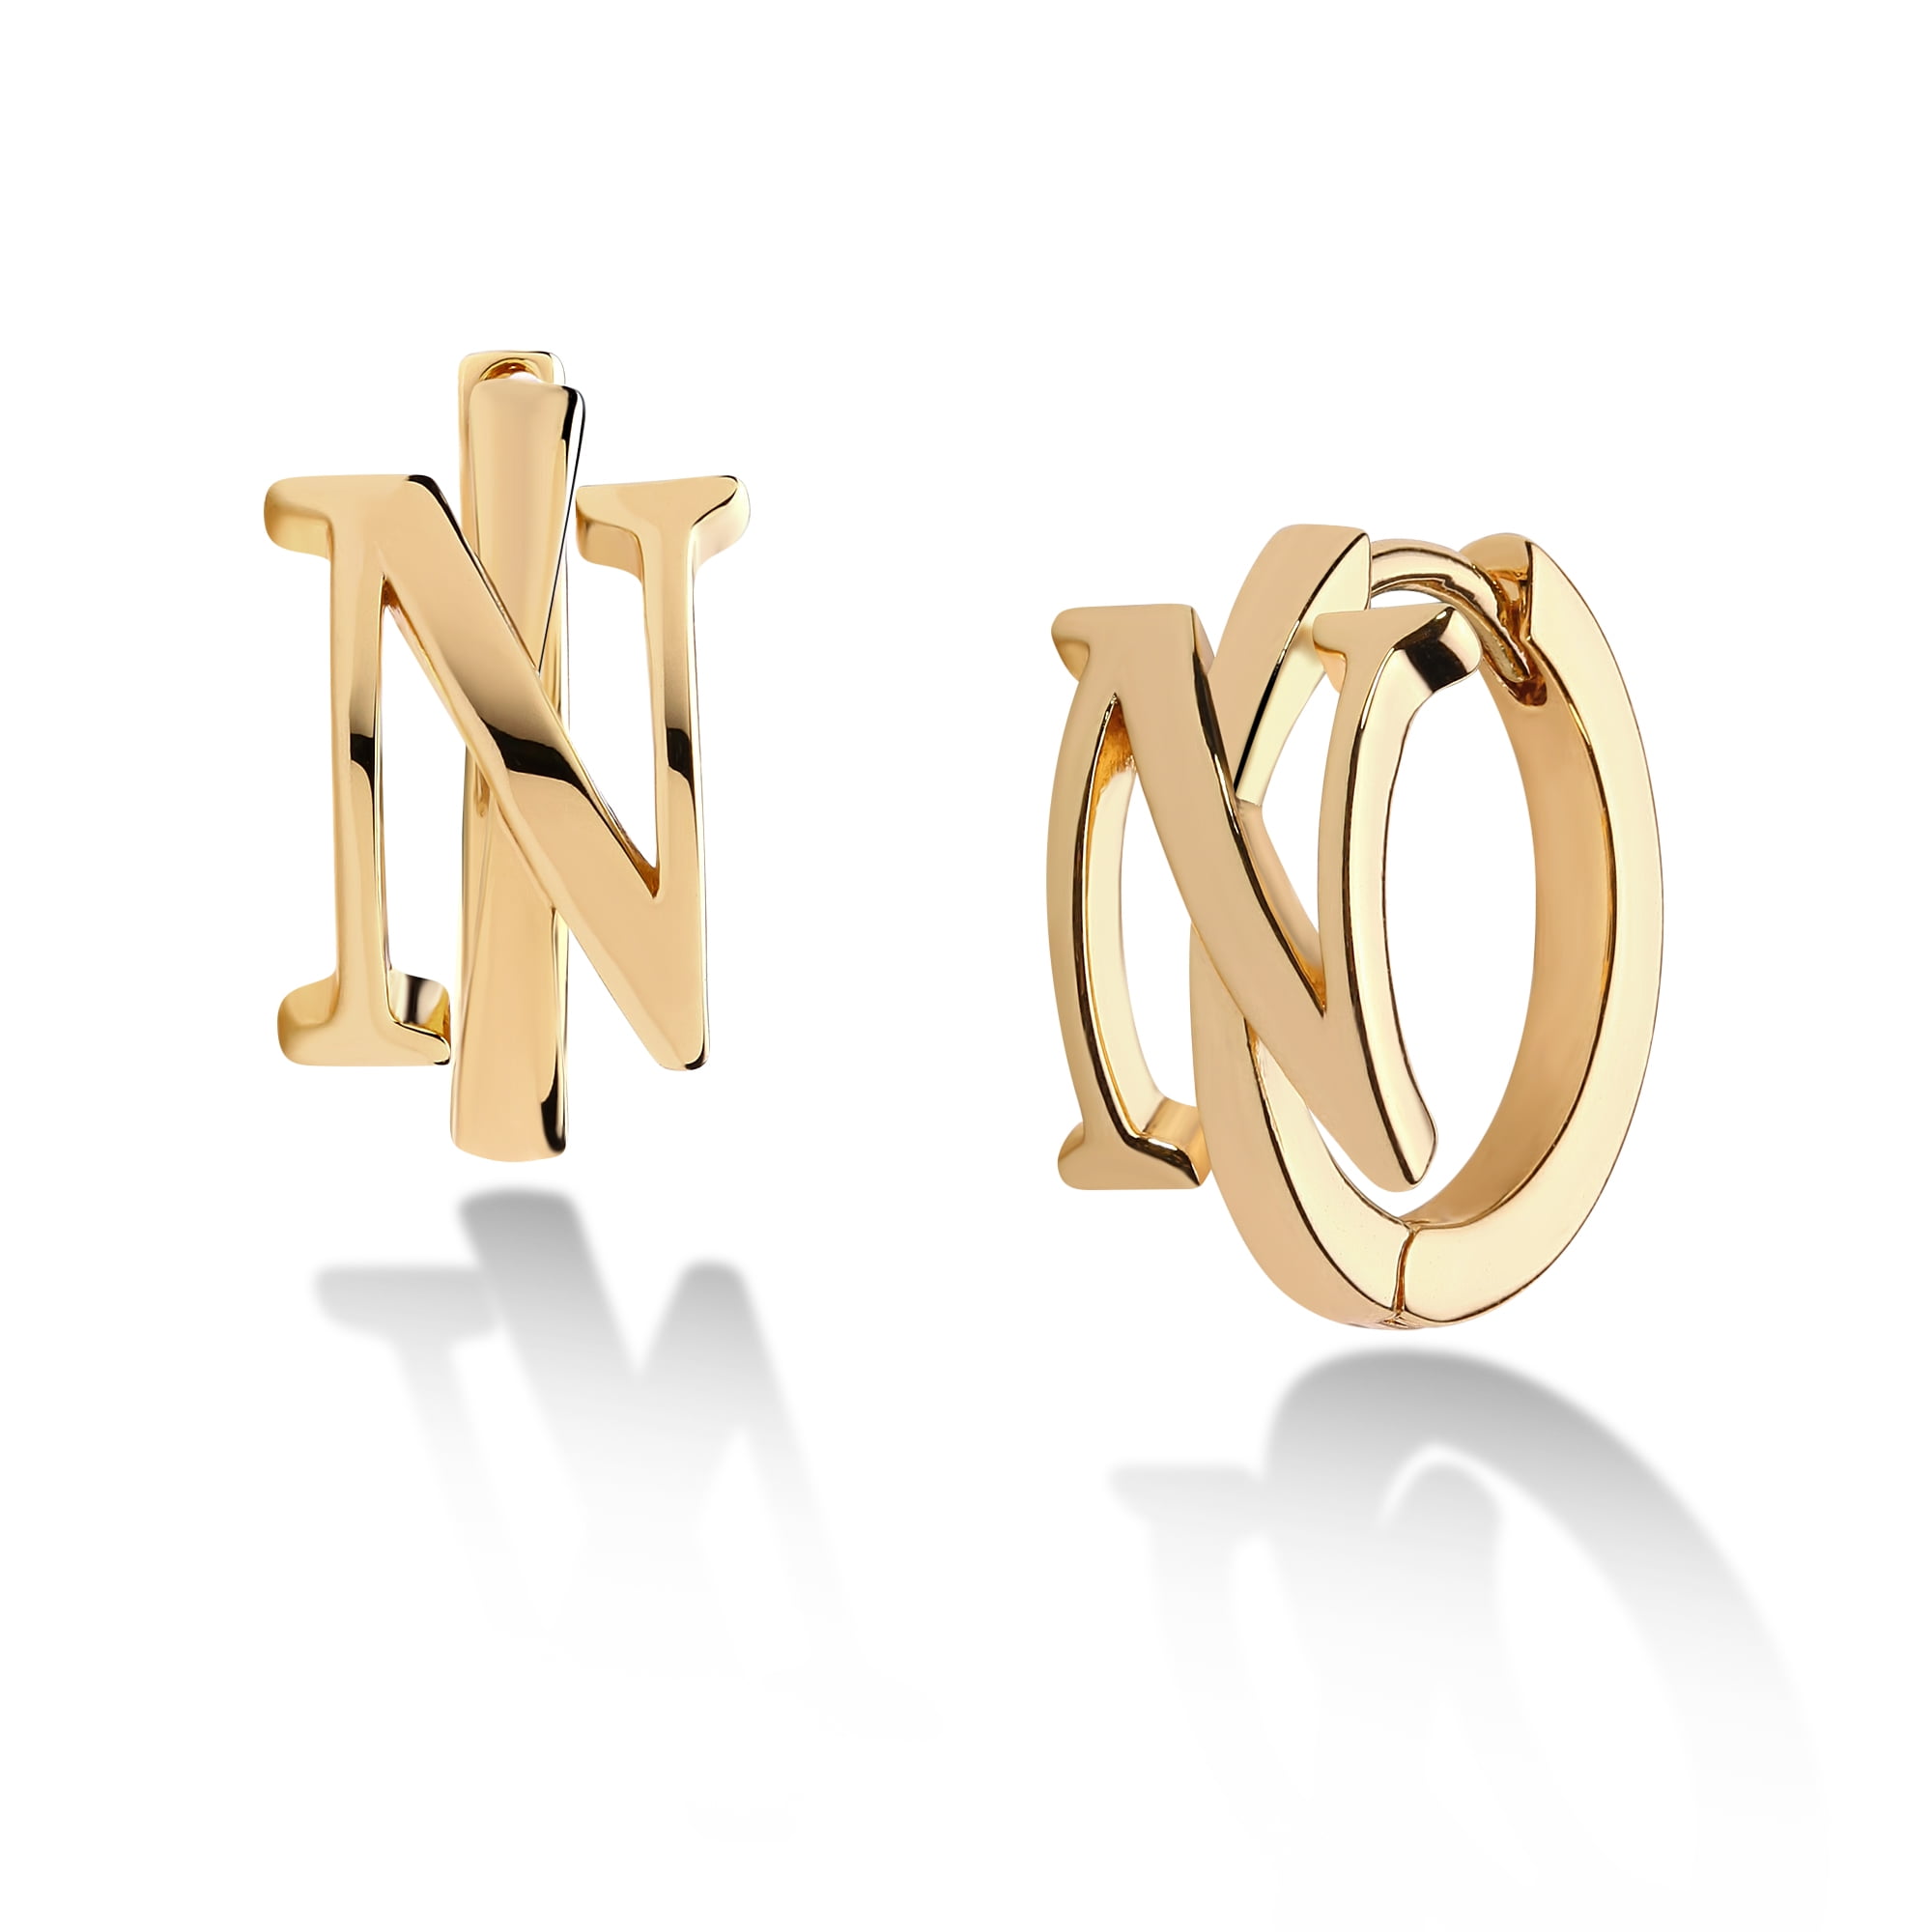 women's earrings statement gift wedding nickel-free earrings gift stainless steel birthday round gold Earrings